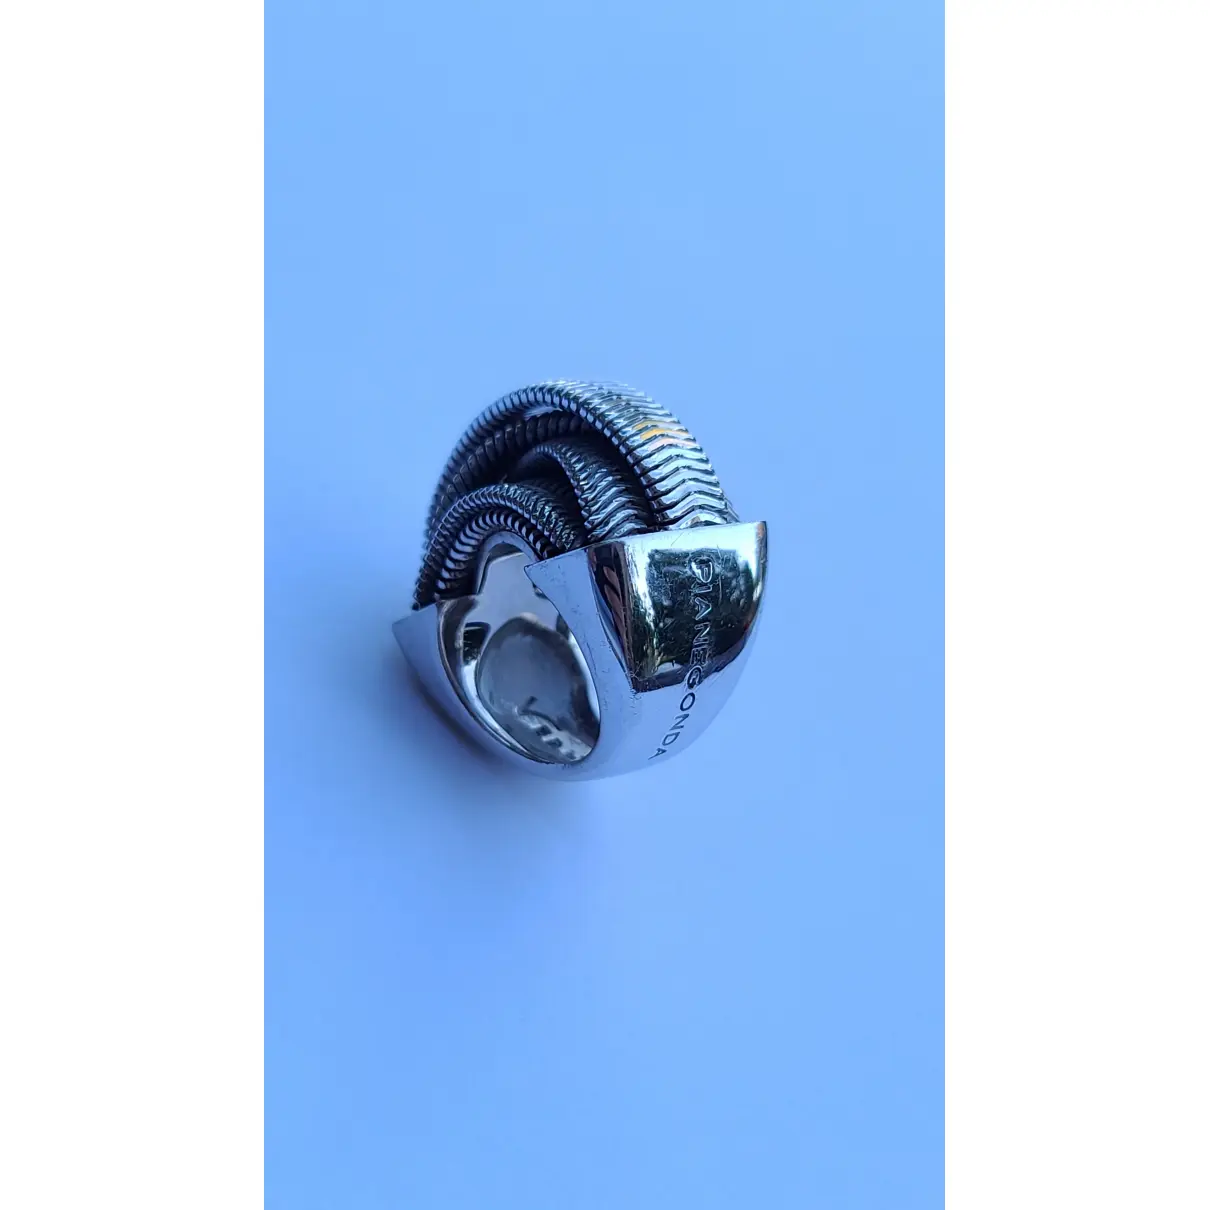 Buy Pianegonda Silver ring online